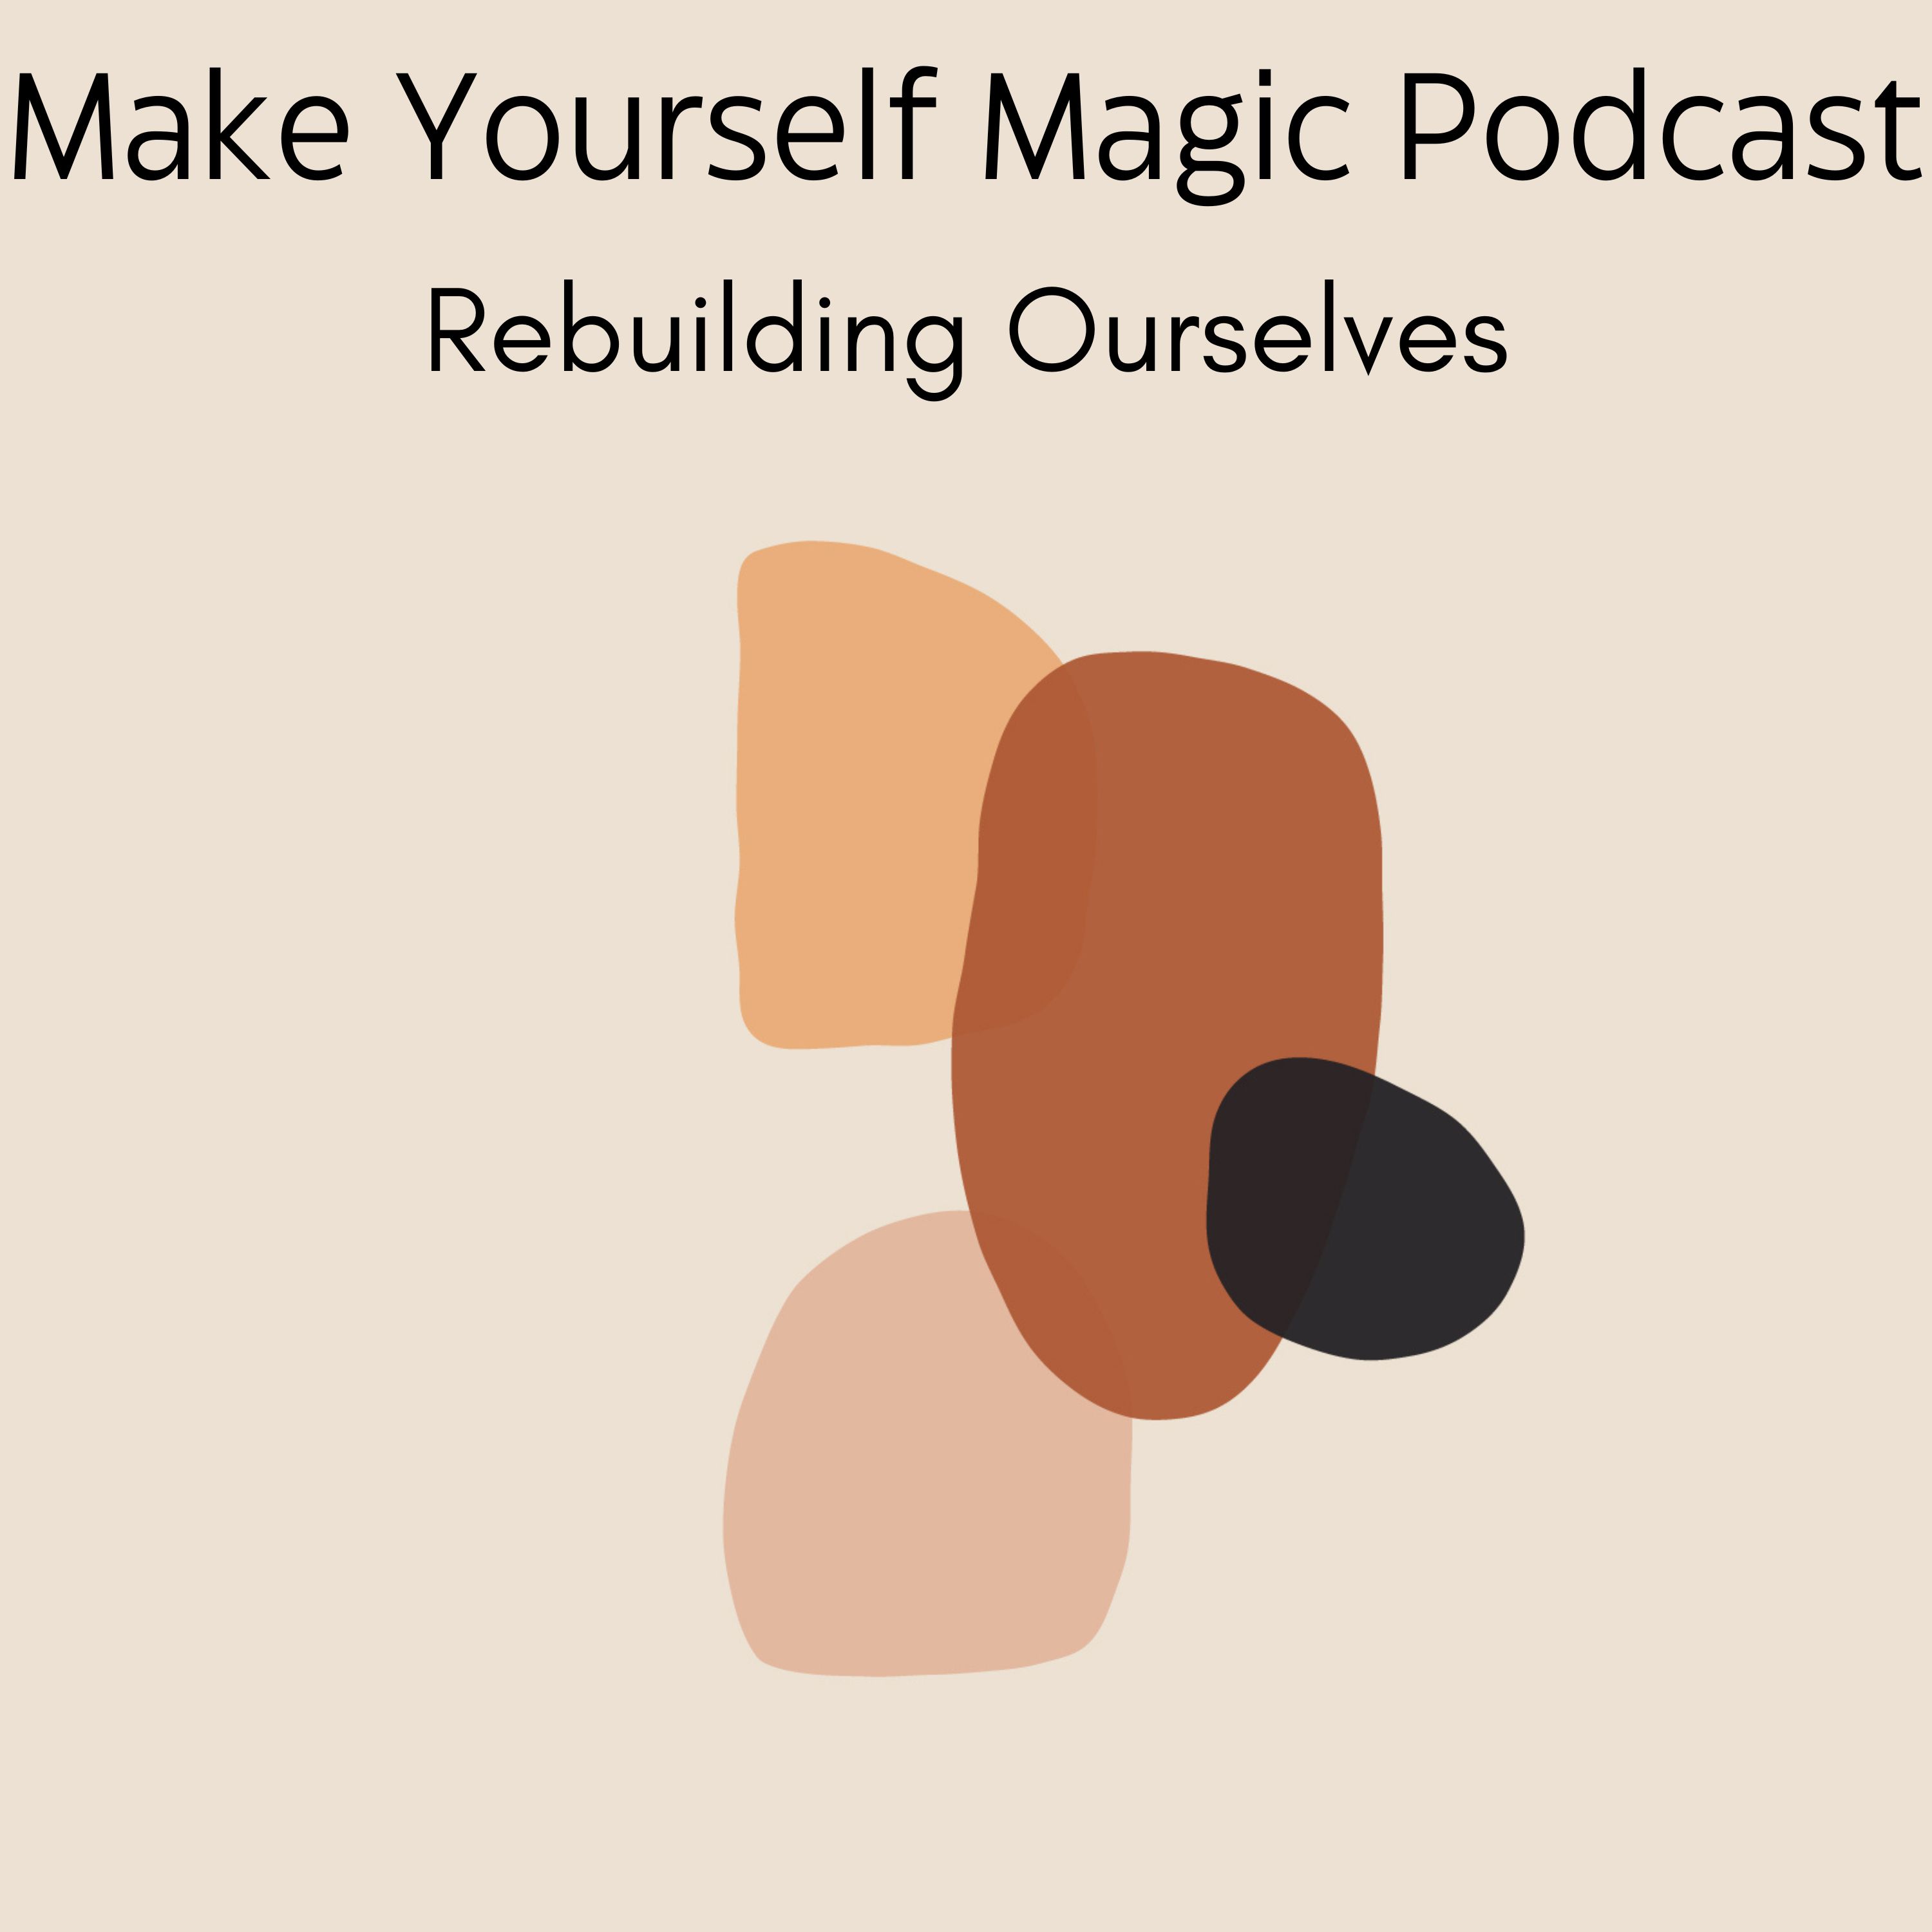 Make Yourself Magic Podcast: Rebuilding